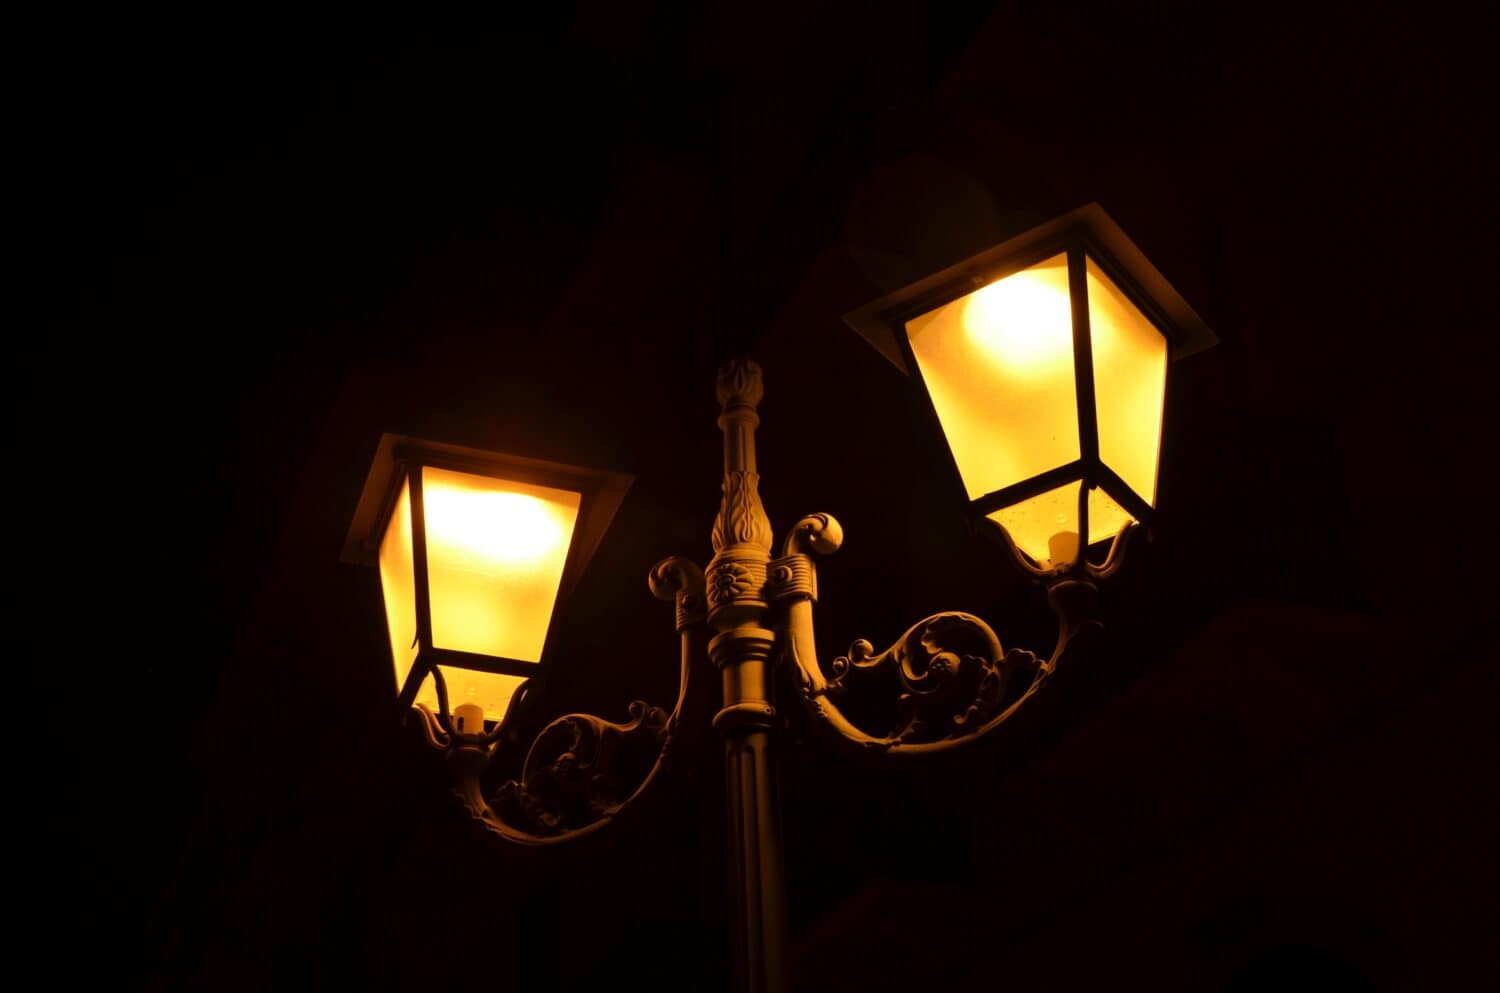 Vintage street lamps illuminating the dark night